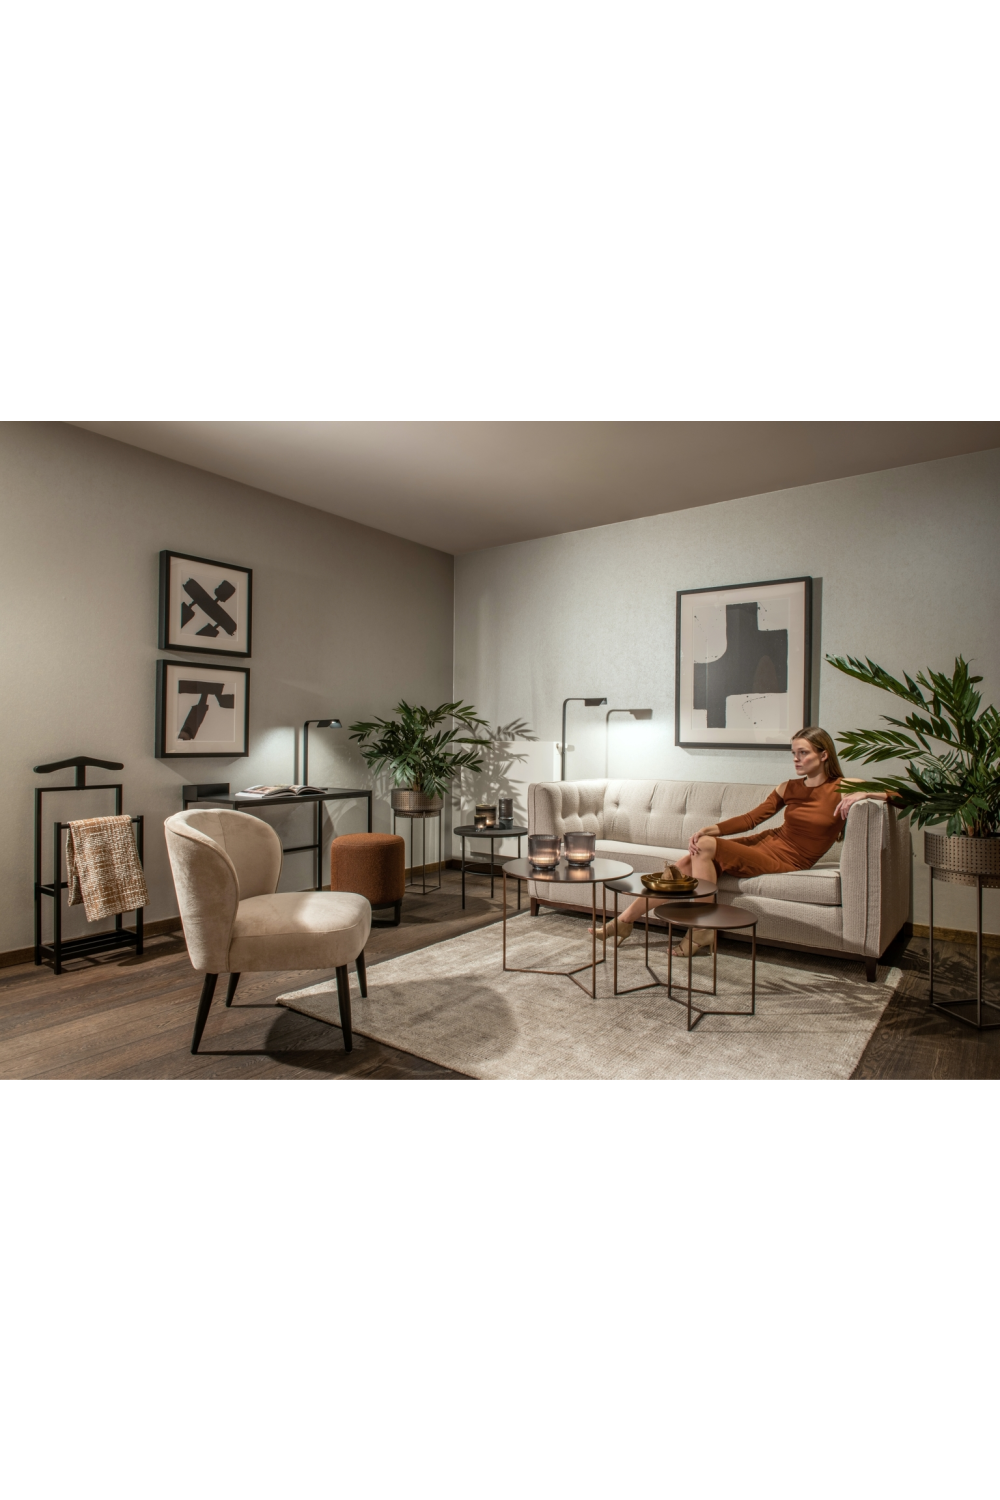 Upholstered Modern Lounge Chair | Dome Deco Arlo | Oroa.com